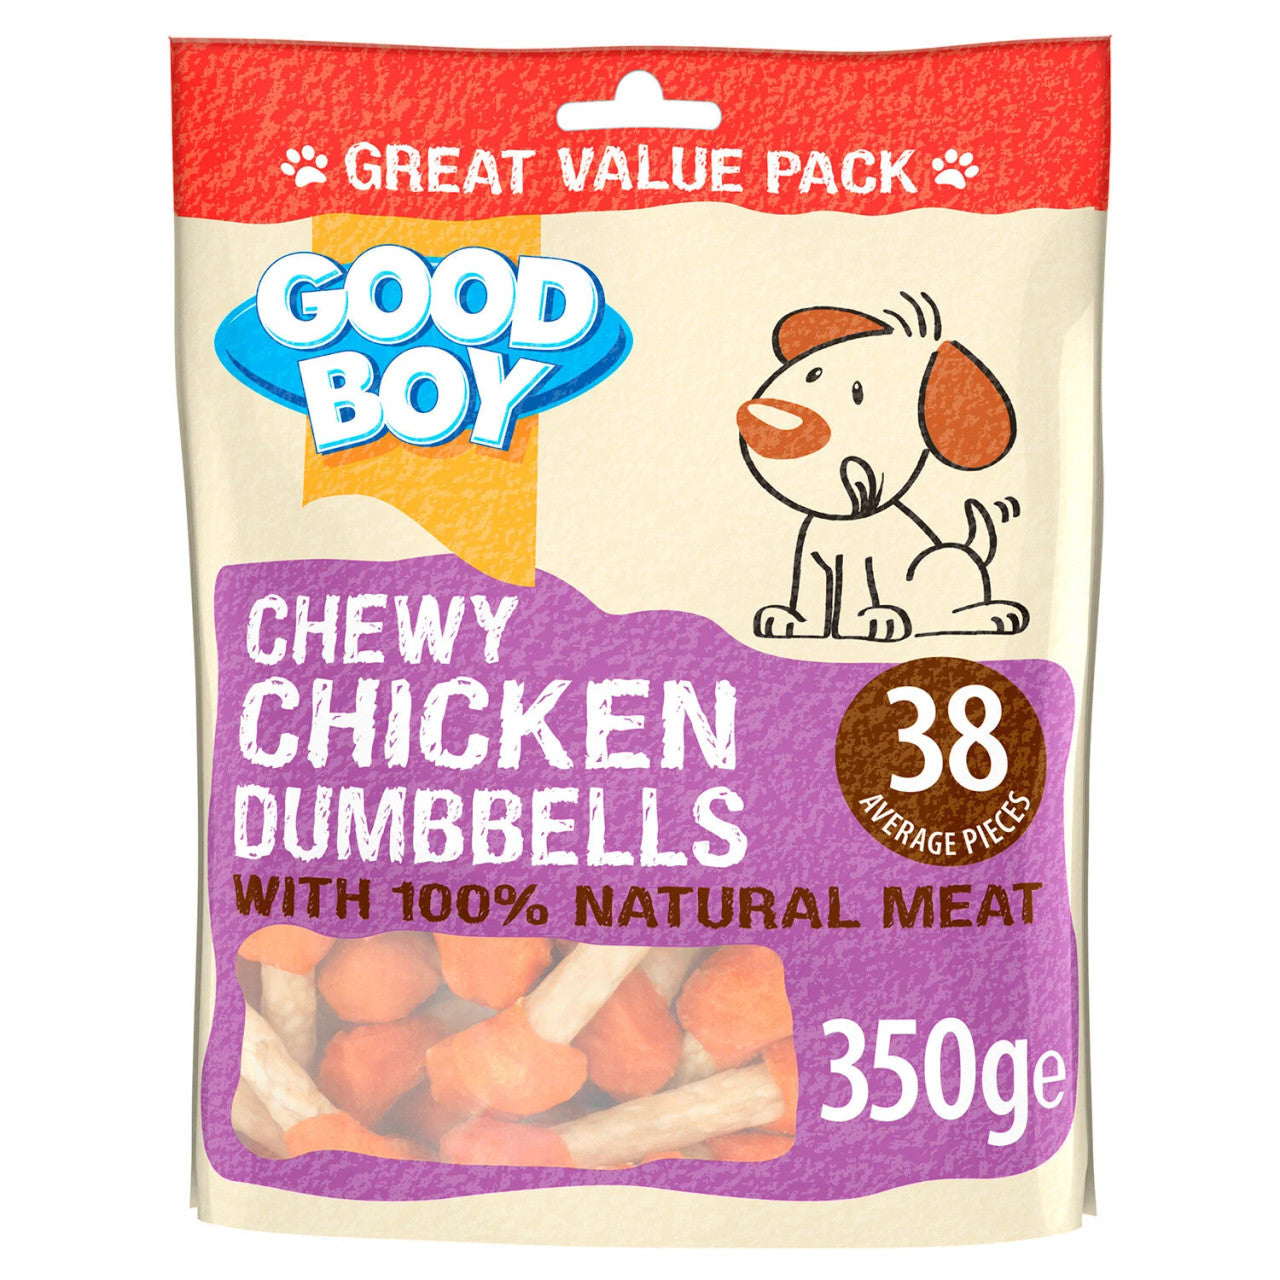 Good Boy 350g Chewy Chicken Dumbbell - Dog Treat